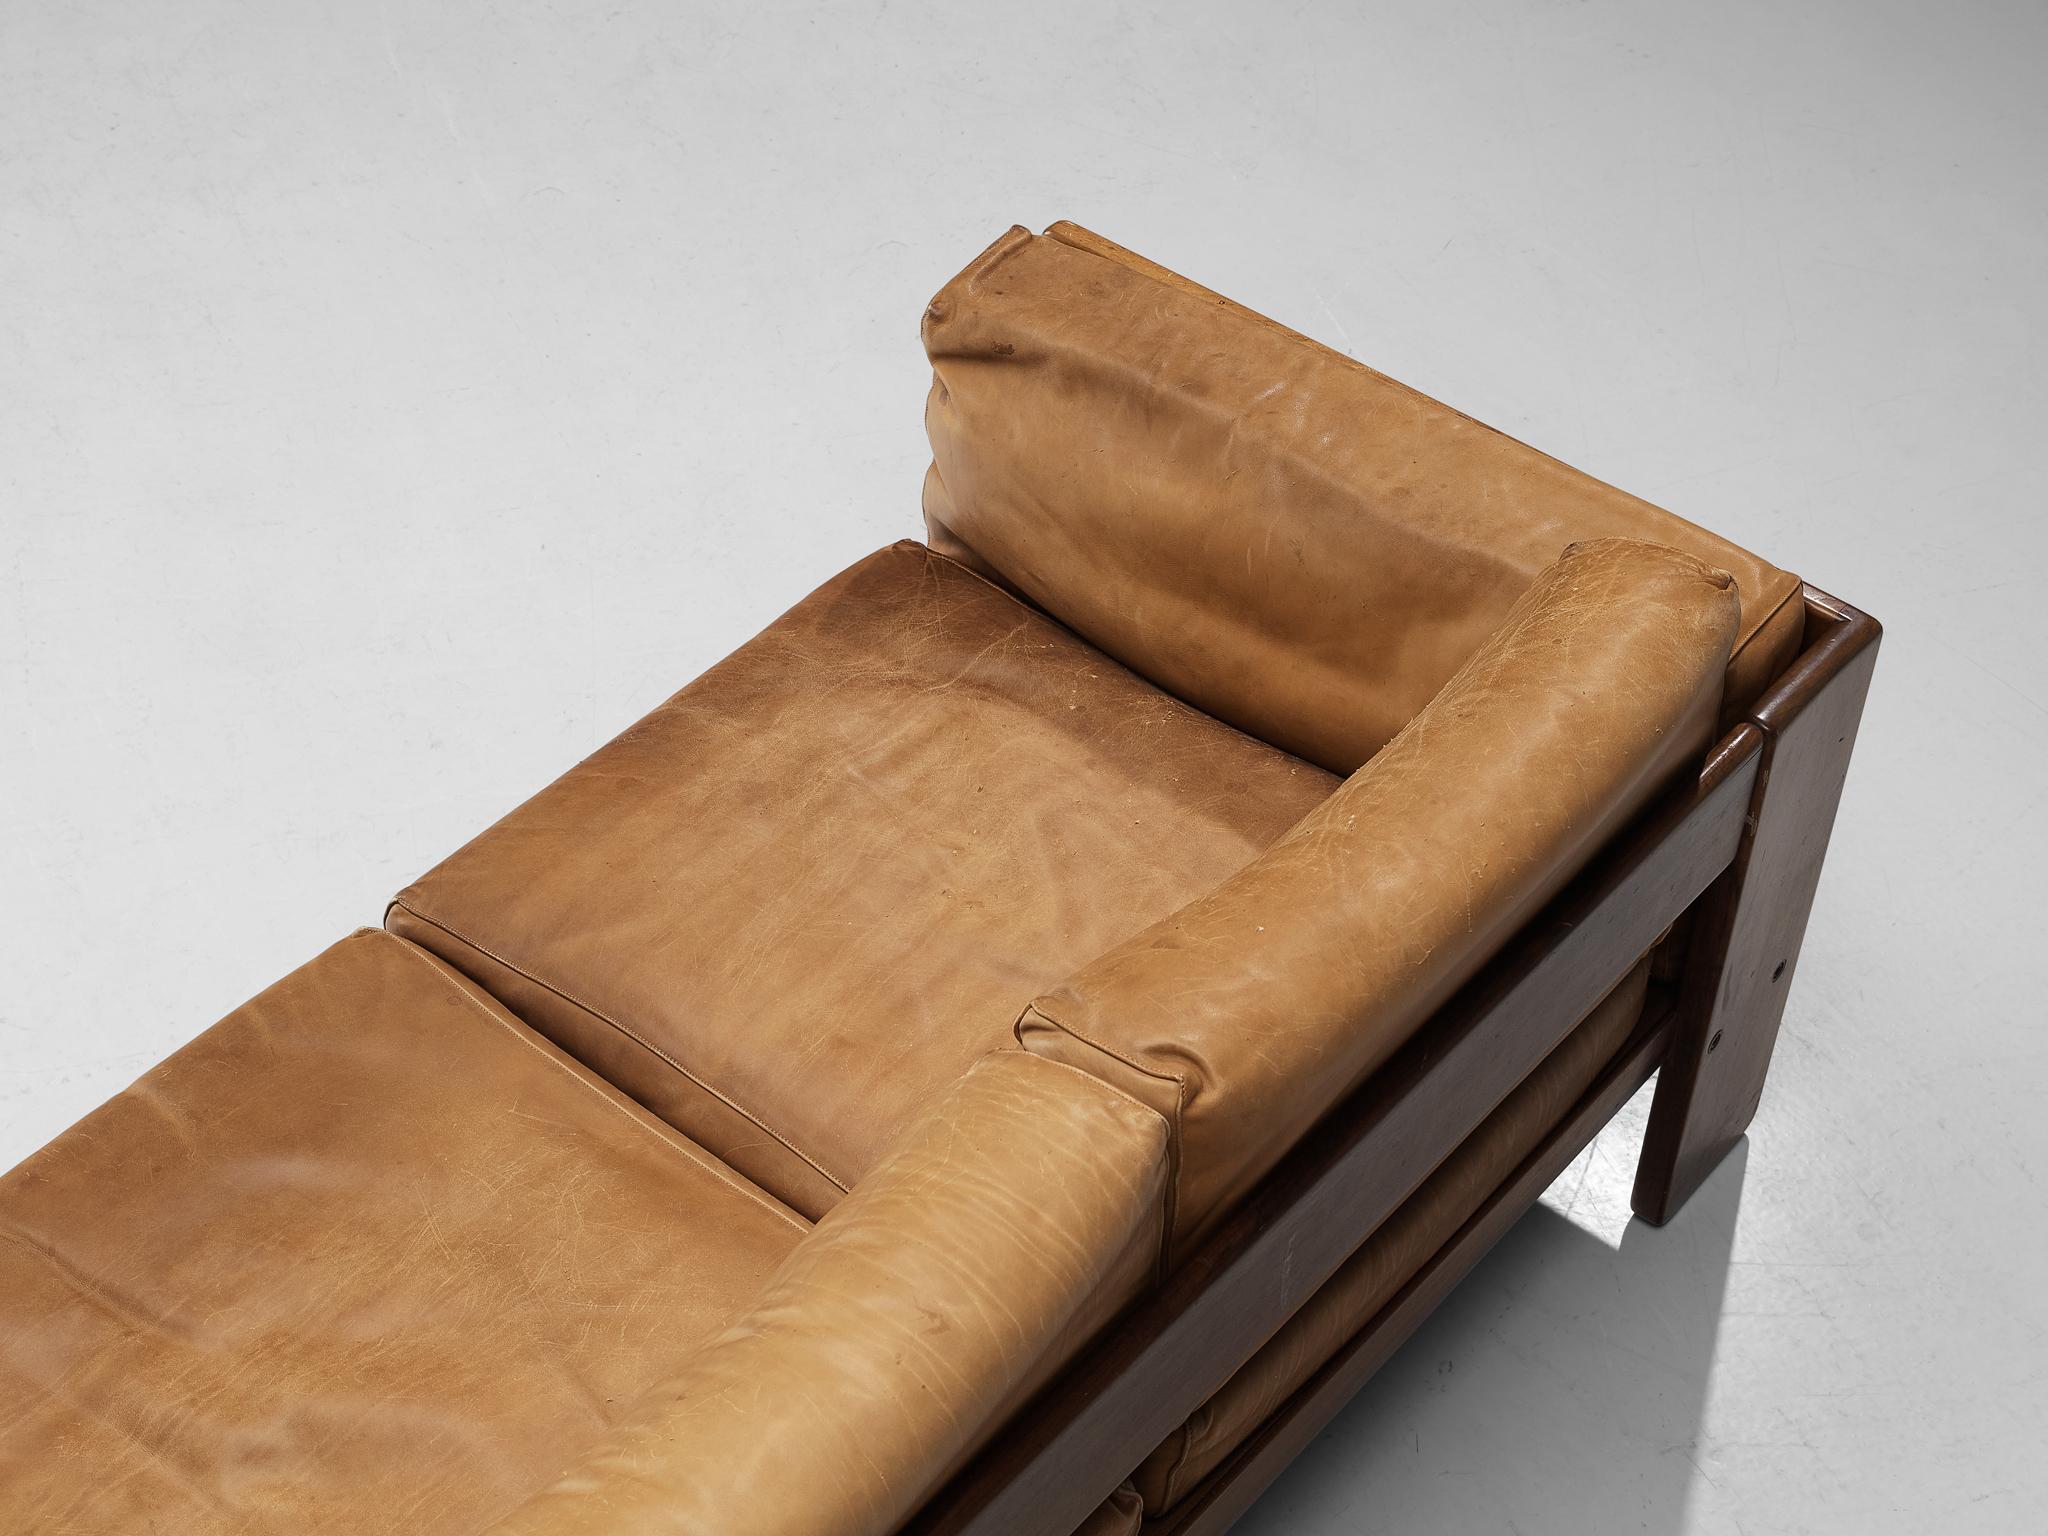 Afra & Tobia Scarpa for Gavina 'Bastiano' Sofa in Patinated Brown Leather 3